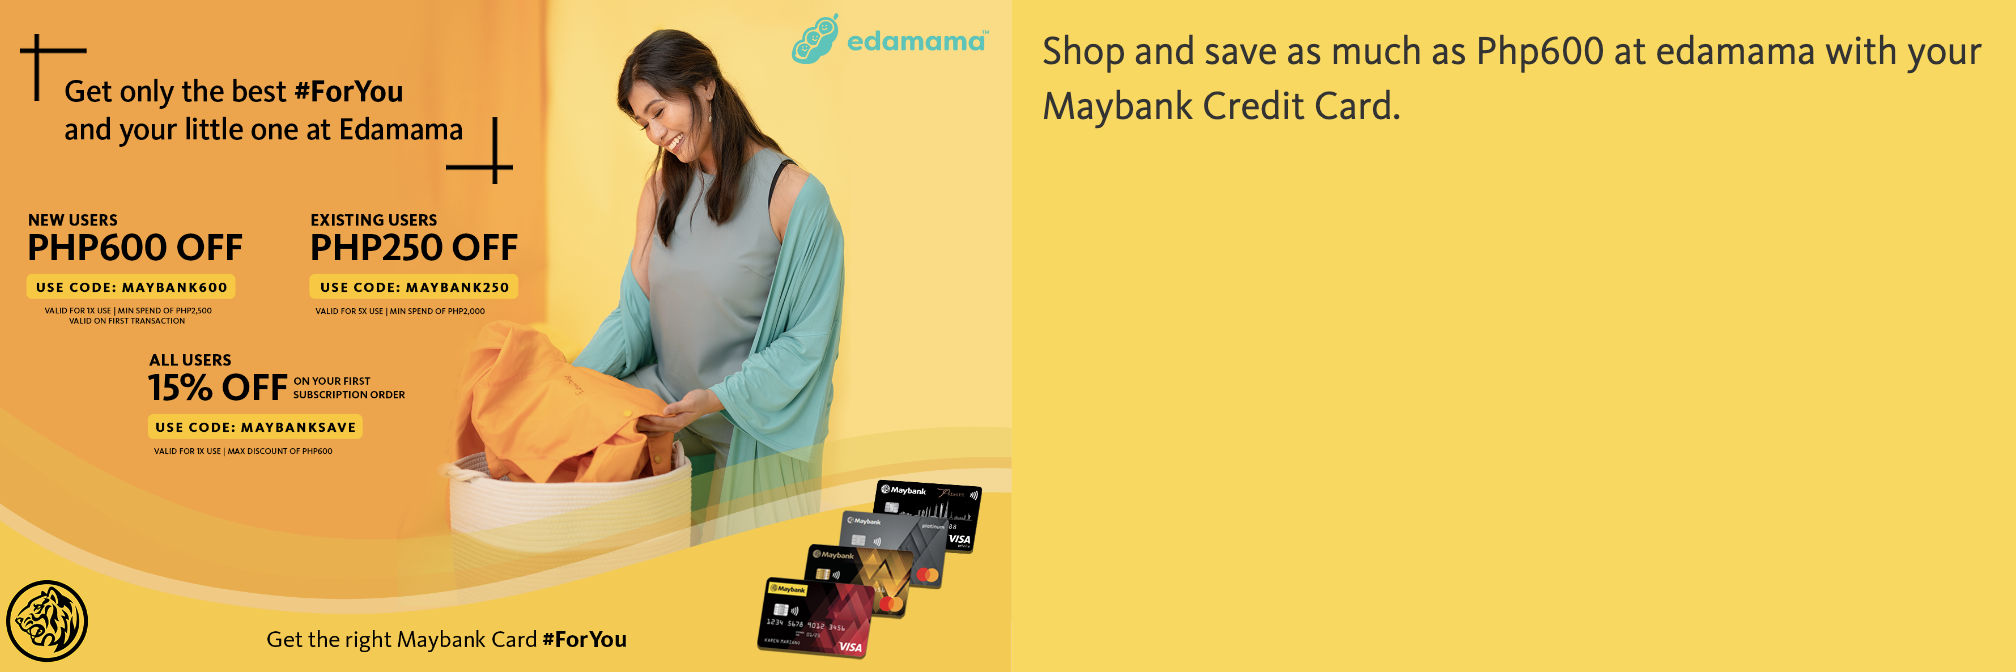 maybank credit card promos - EDAMAMA